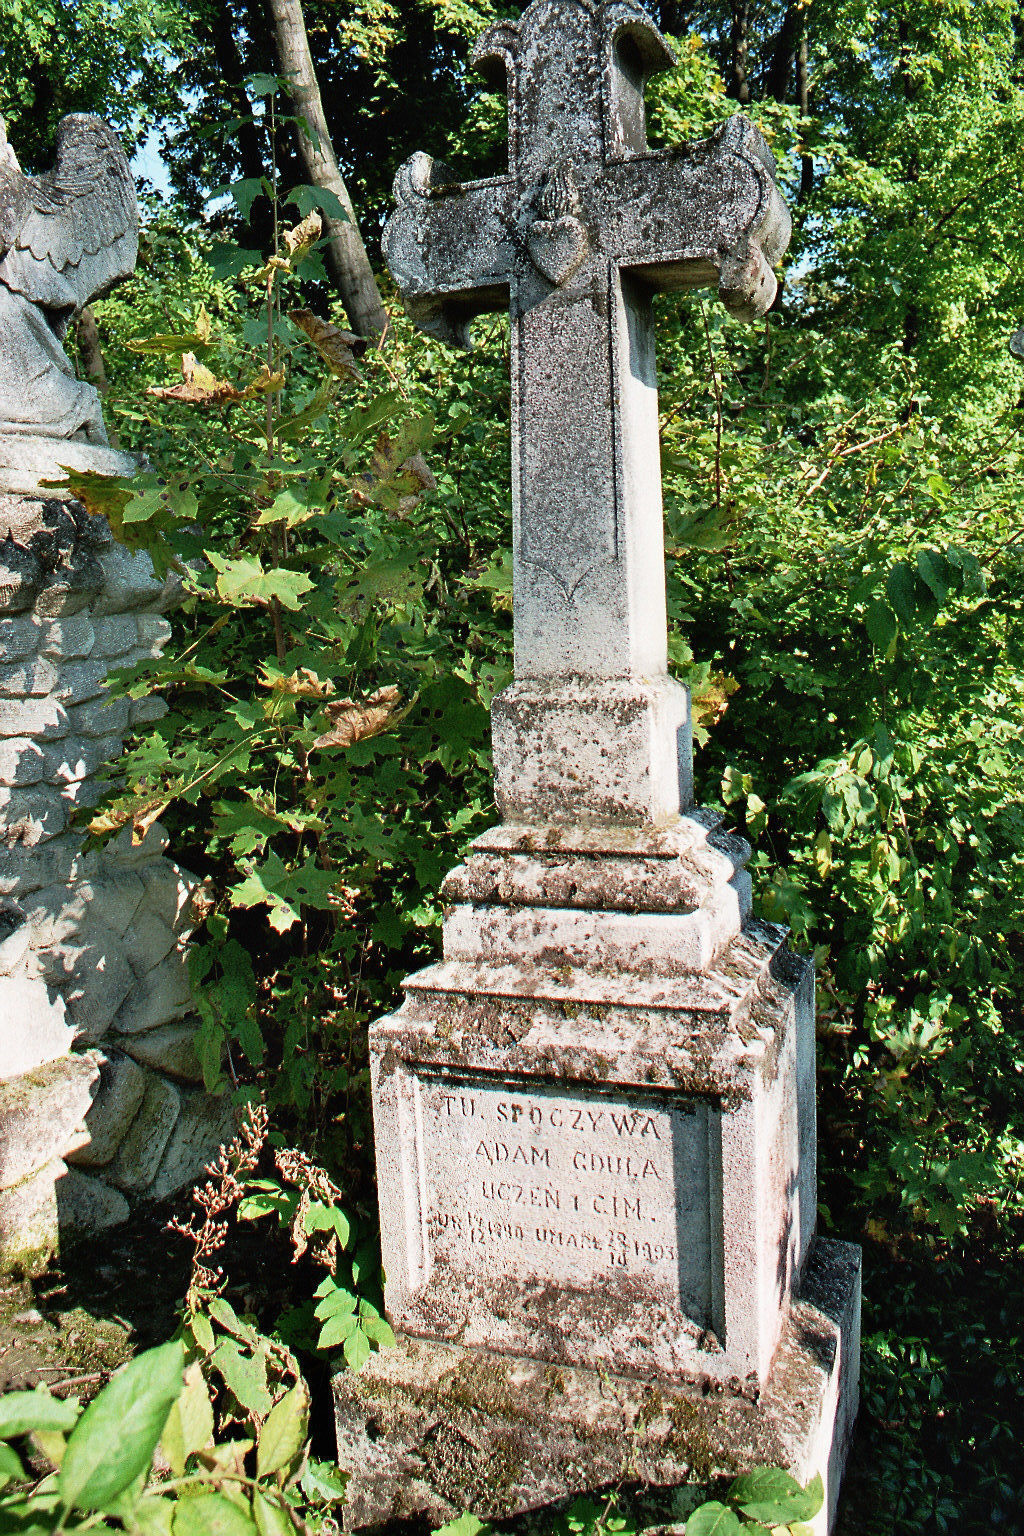 Tombstone of Adam Gdula, Buczacz city cemetery, as of 2005.